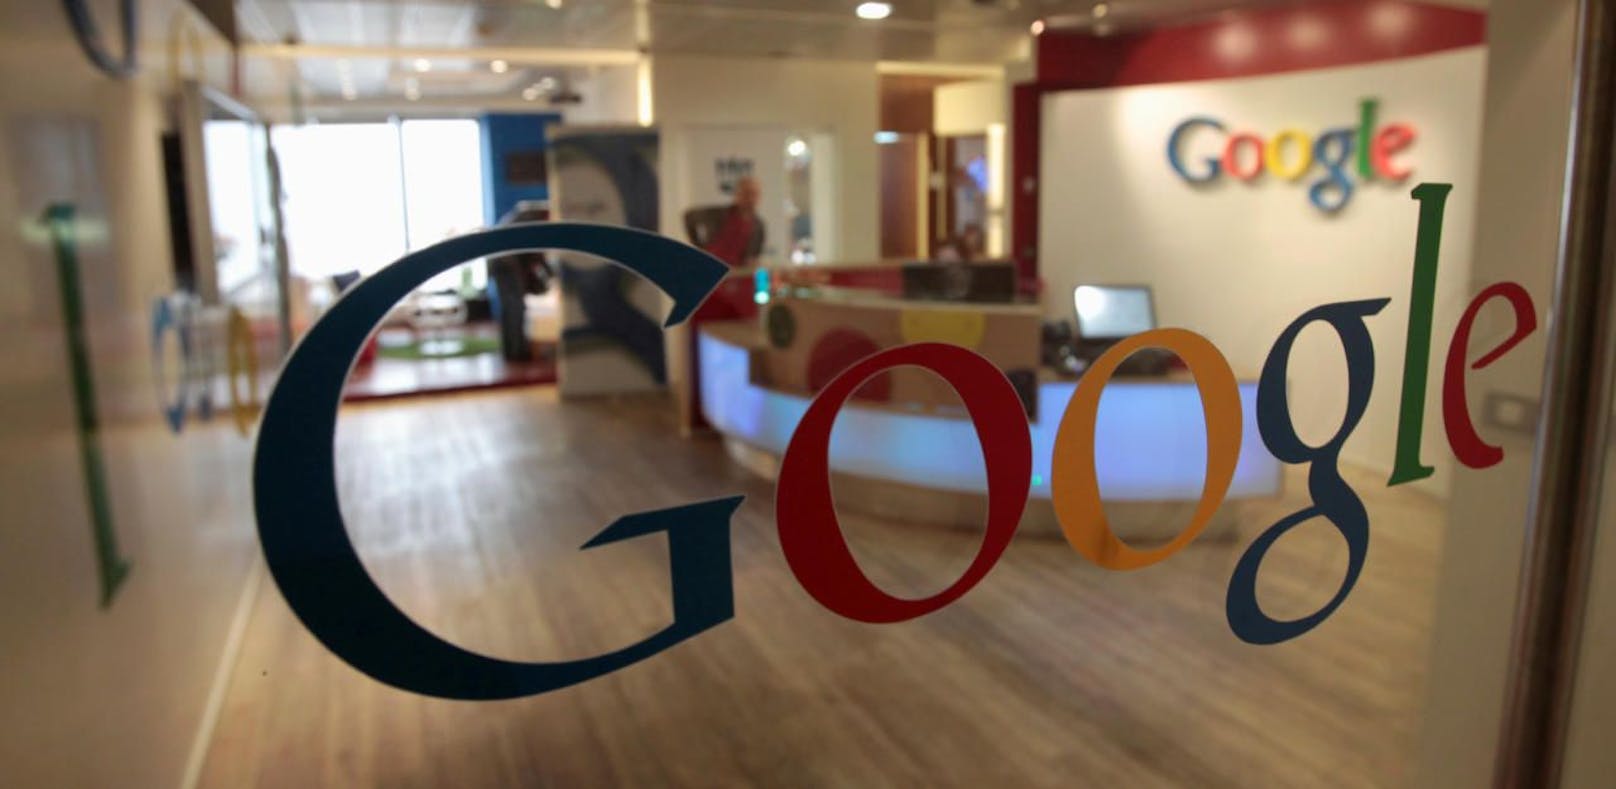 Die Google-Zentrale in Tel Aviv.